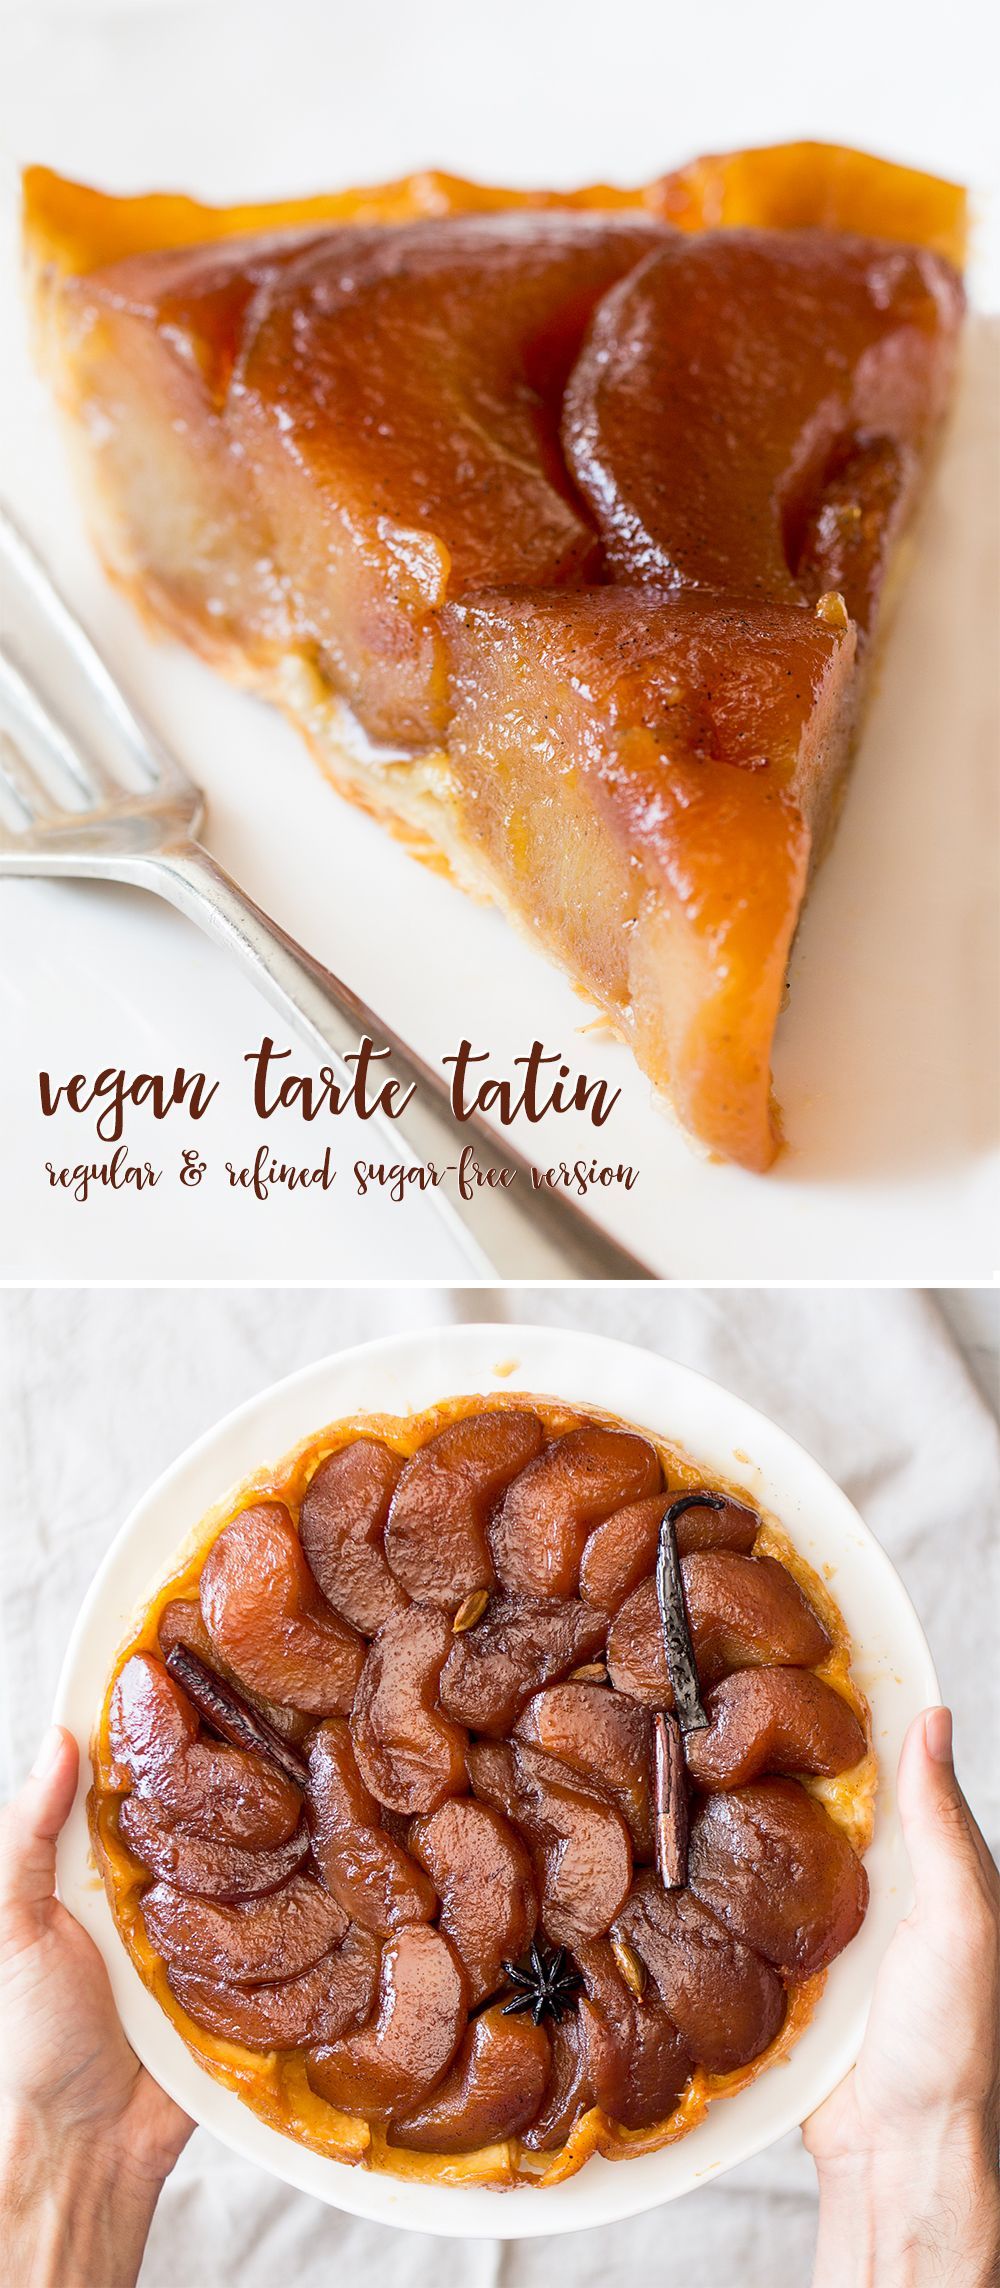 Vegan tarte tatin -   23 apple recipes vegan
 ideas